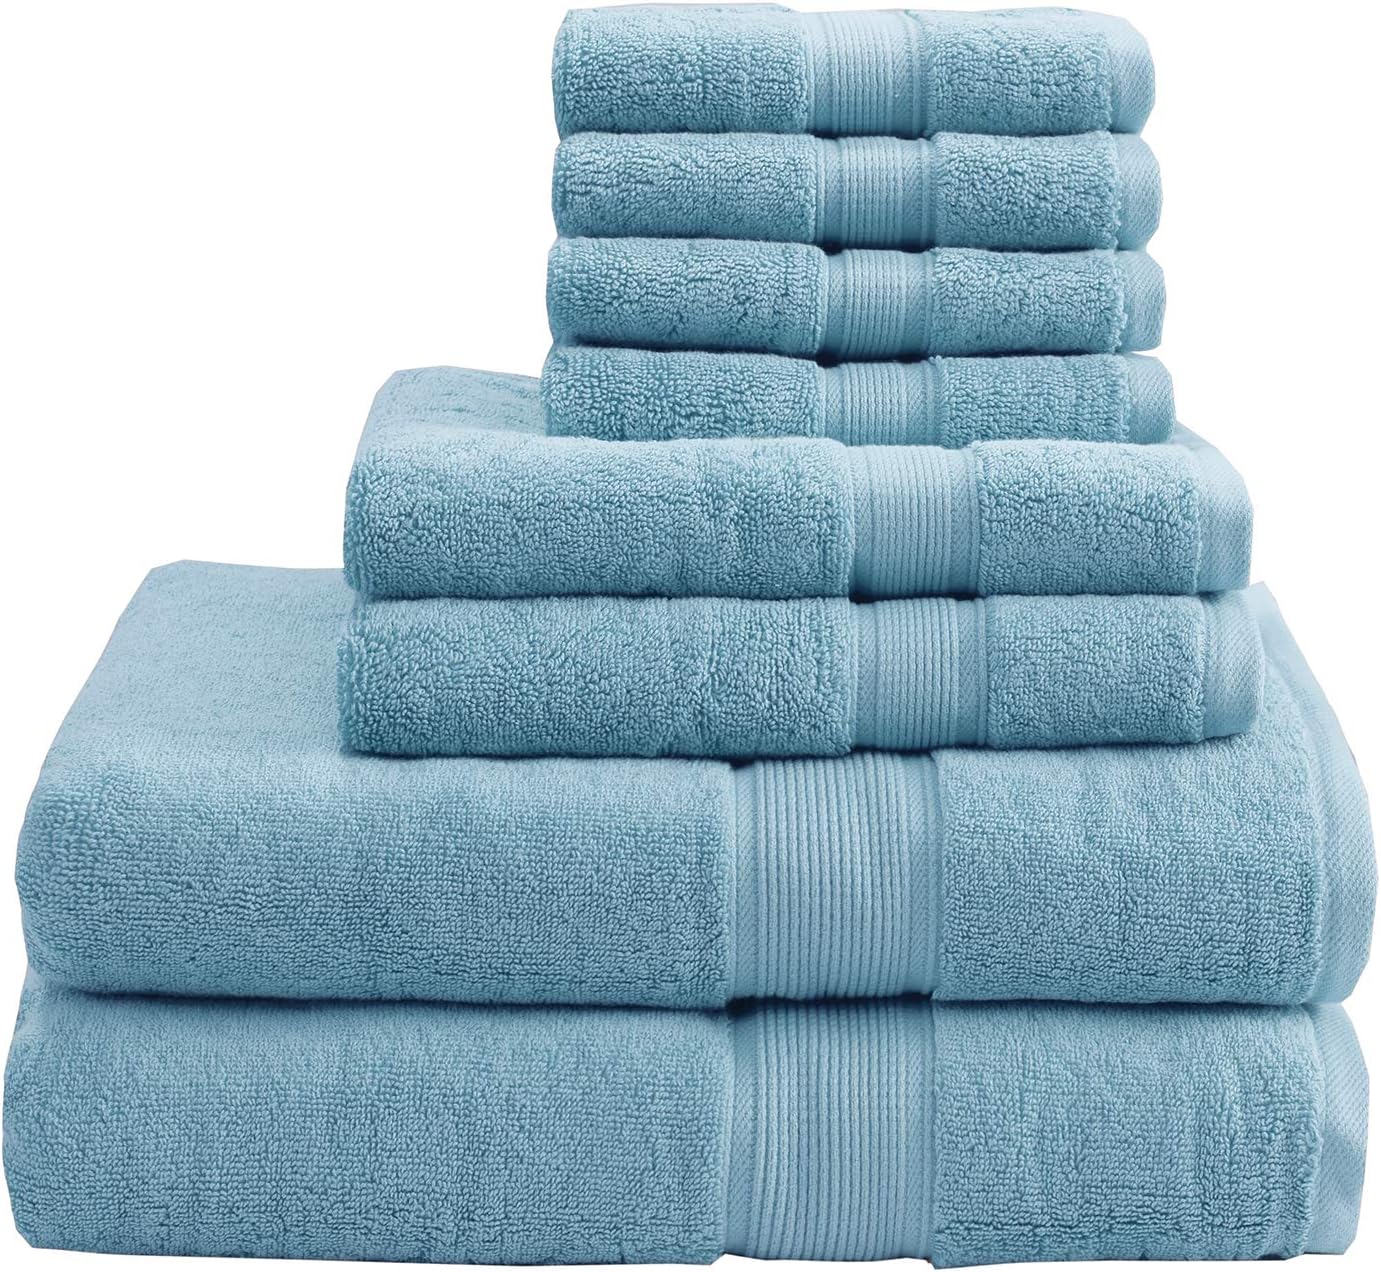 White Classic Luxury Bath Towels - Cotton Hotel Spa Towel 27x54 4-Pack Aqua, Size: 27 x 54, Green